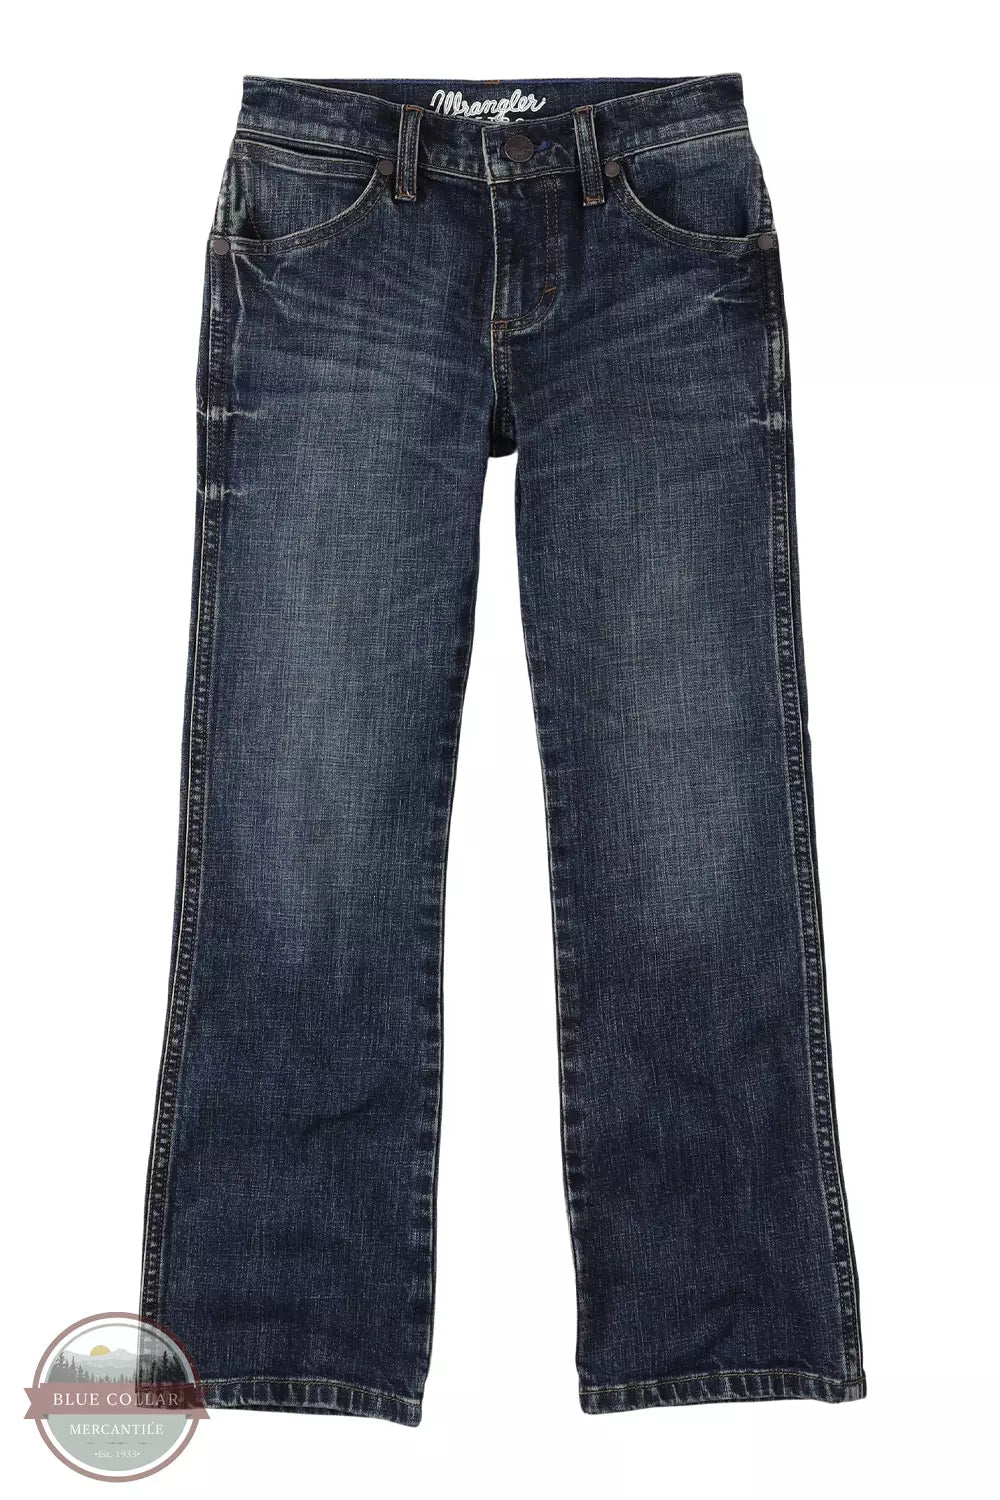 Wrangler 112336145 Retro Slim Bootcut Jeans in Layton Front View